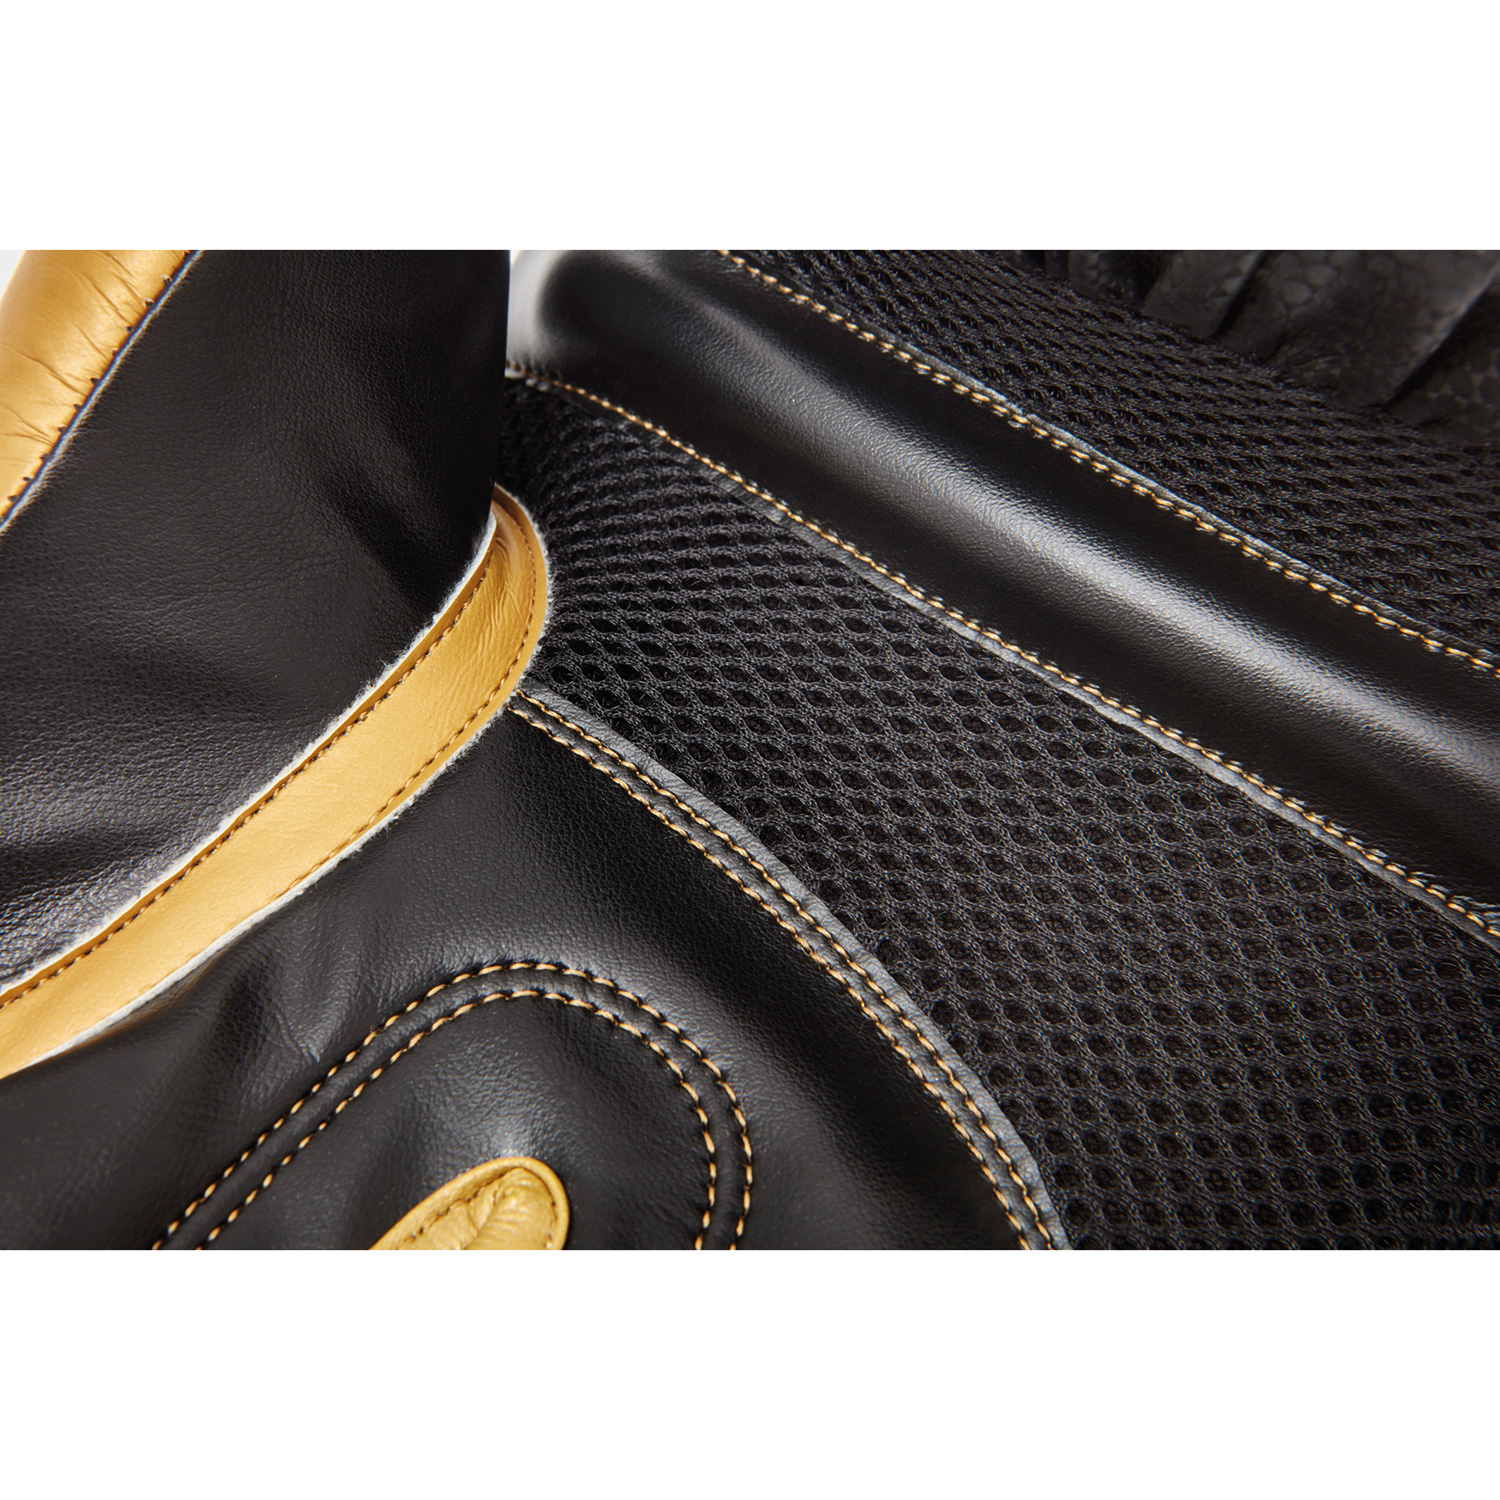 Reebok boxing gloves gold/black 14 oz